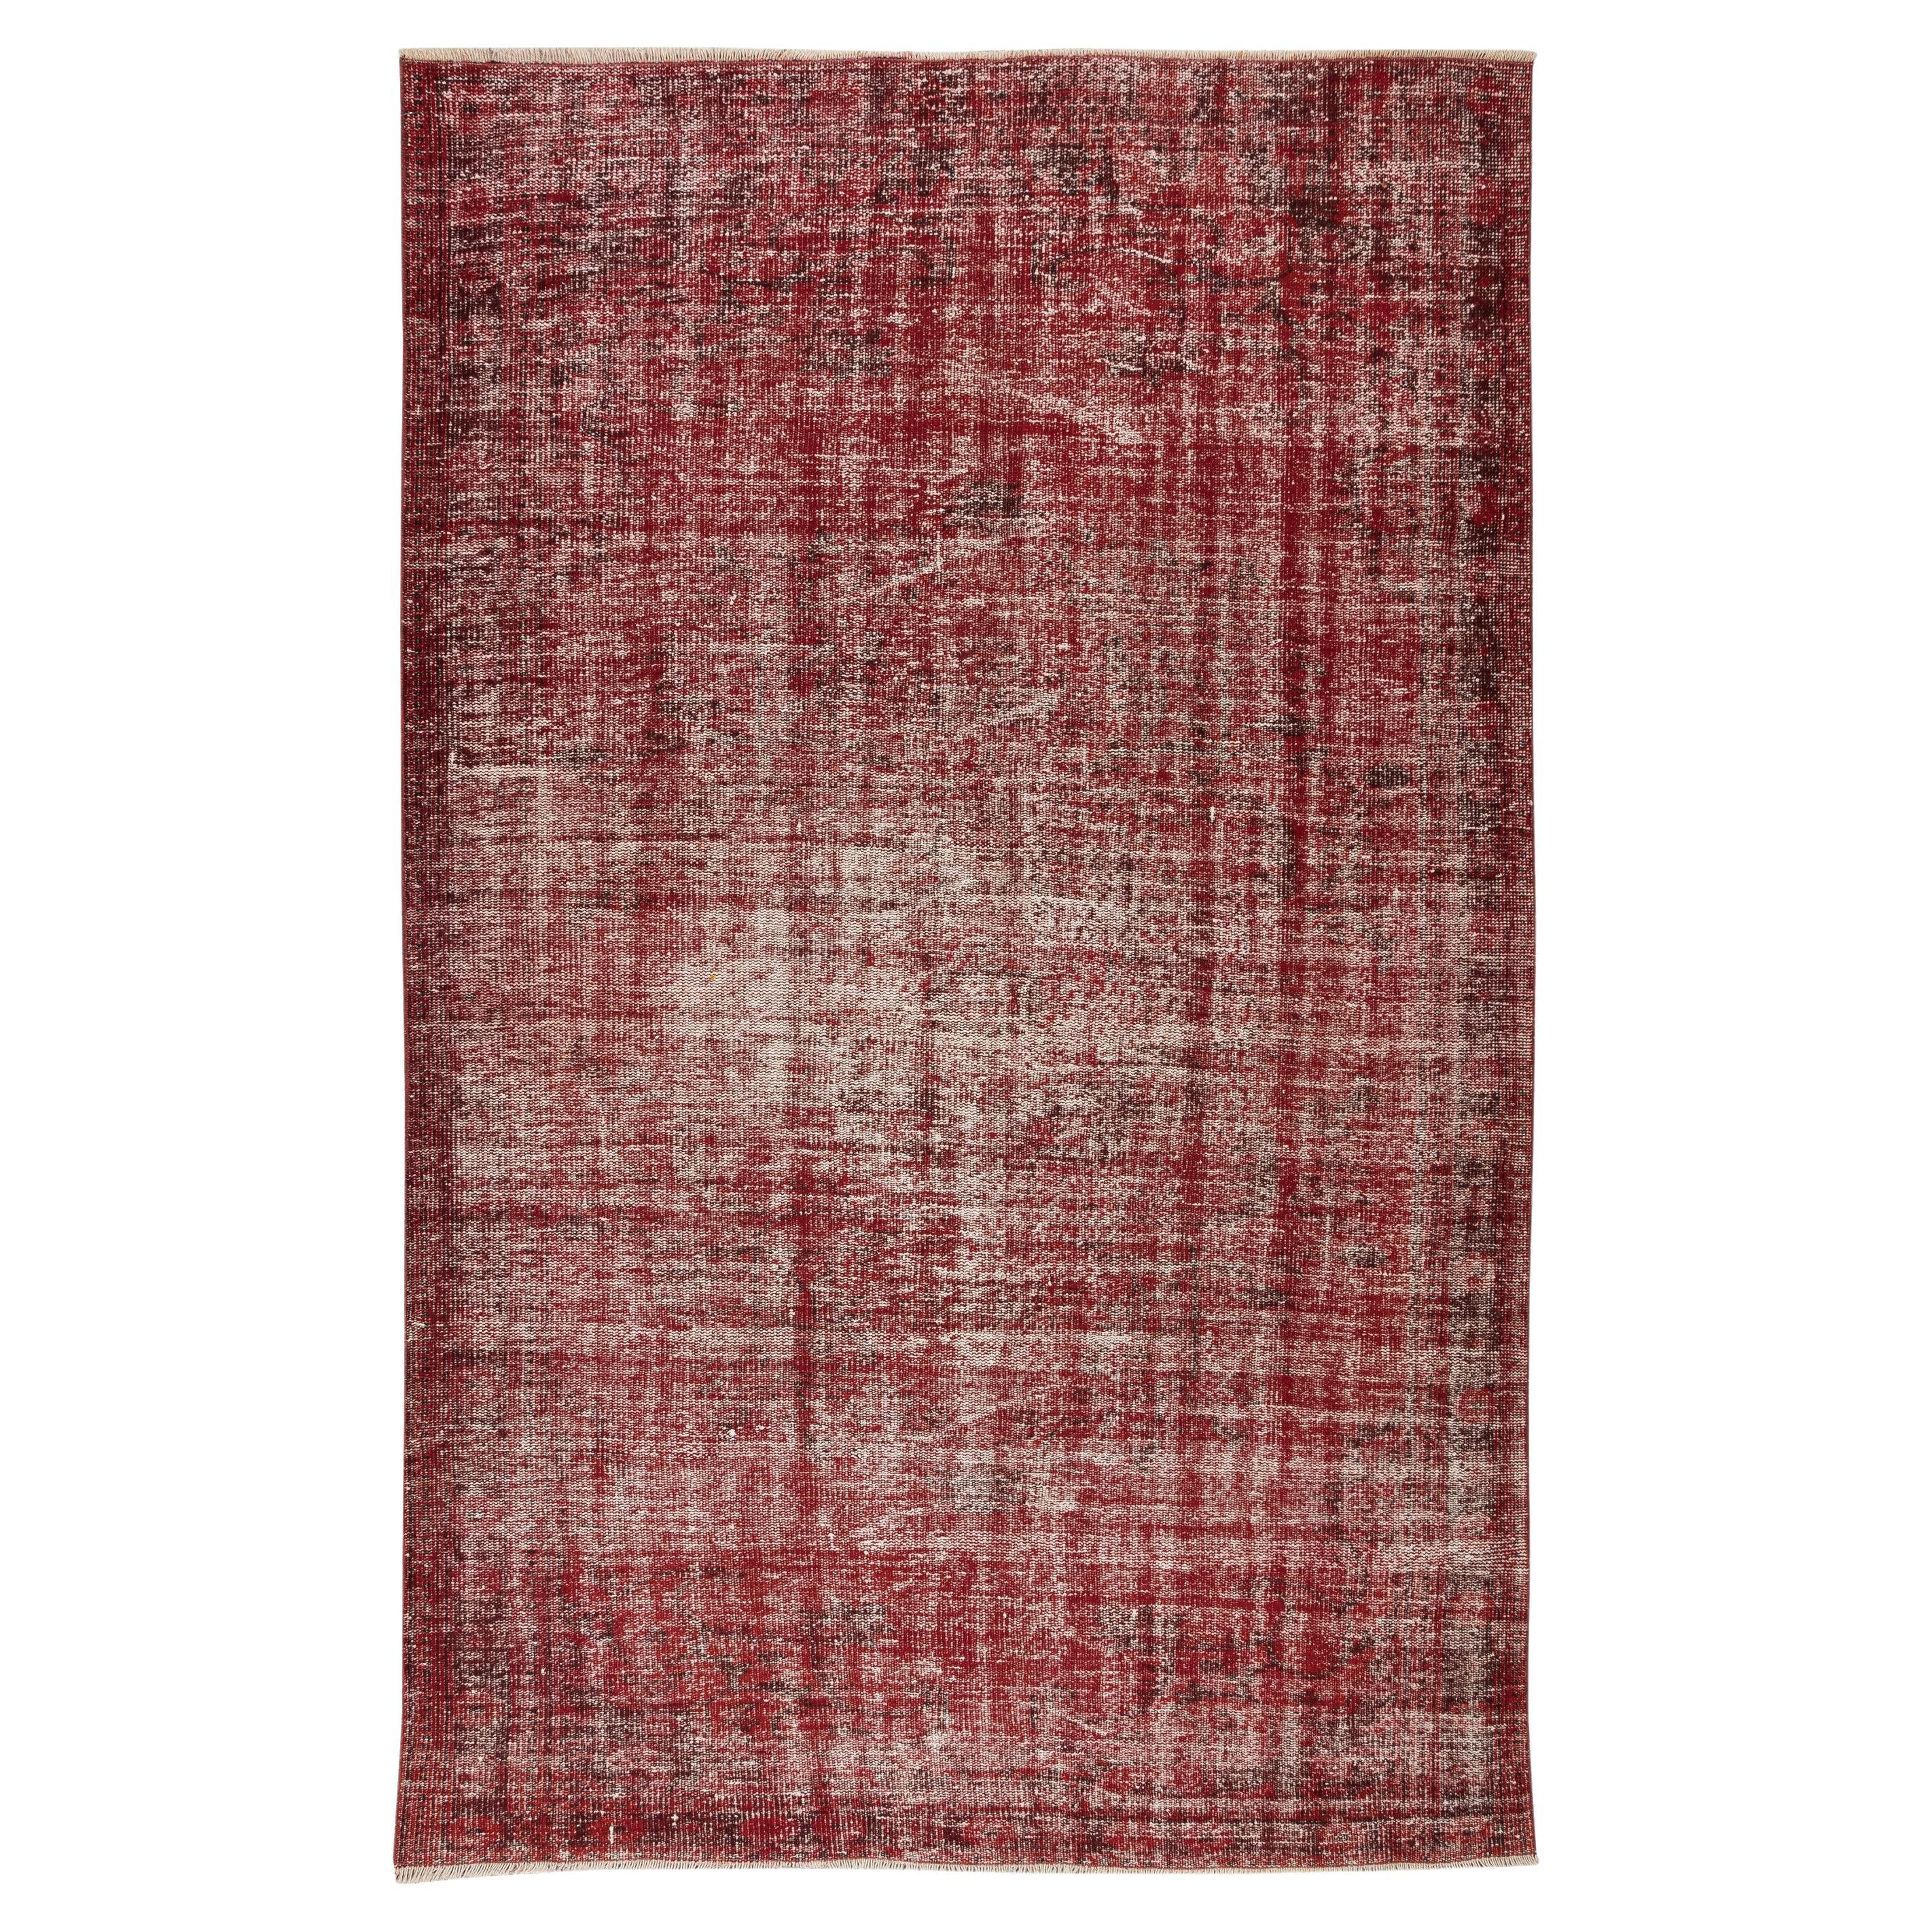 Turkish Burgundy Red Rug, Shabby Chic Floor Covering, Handmade Carpet